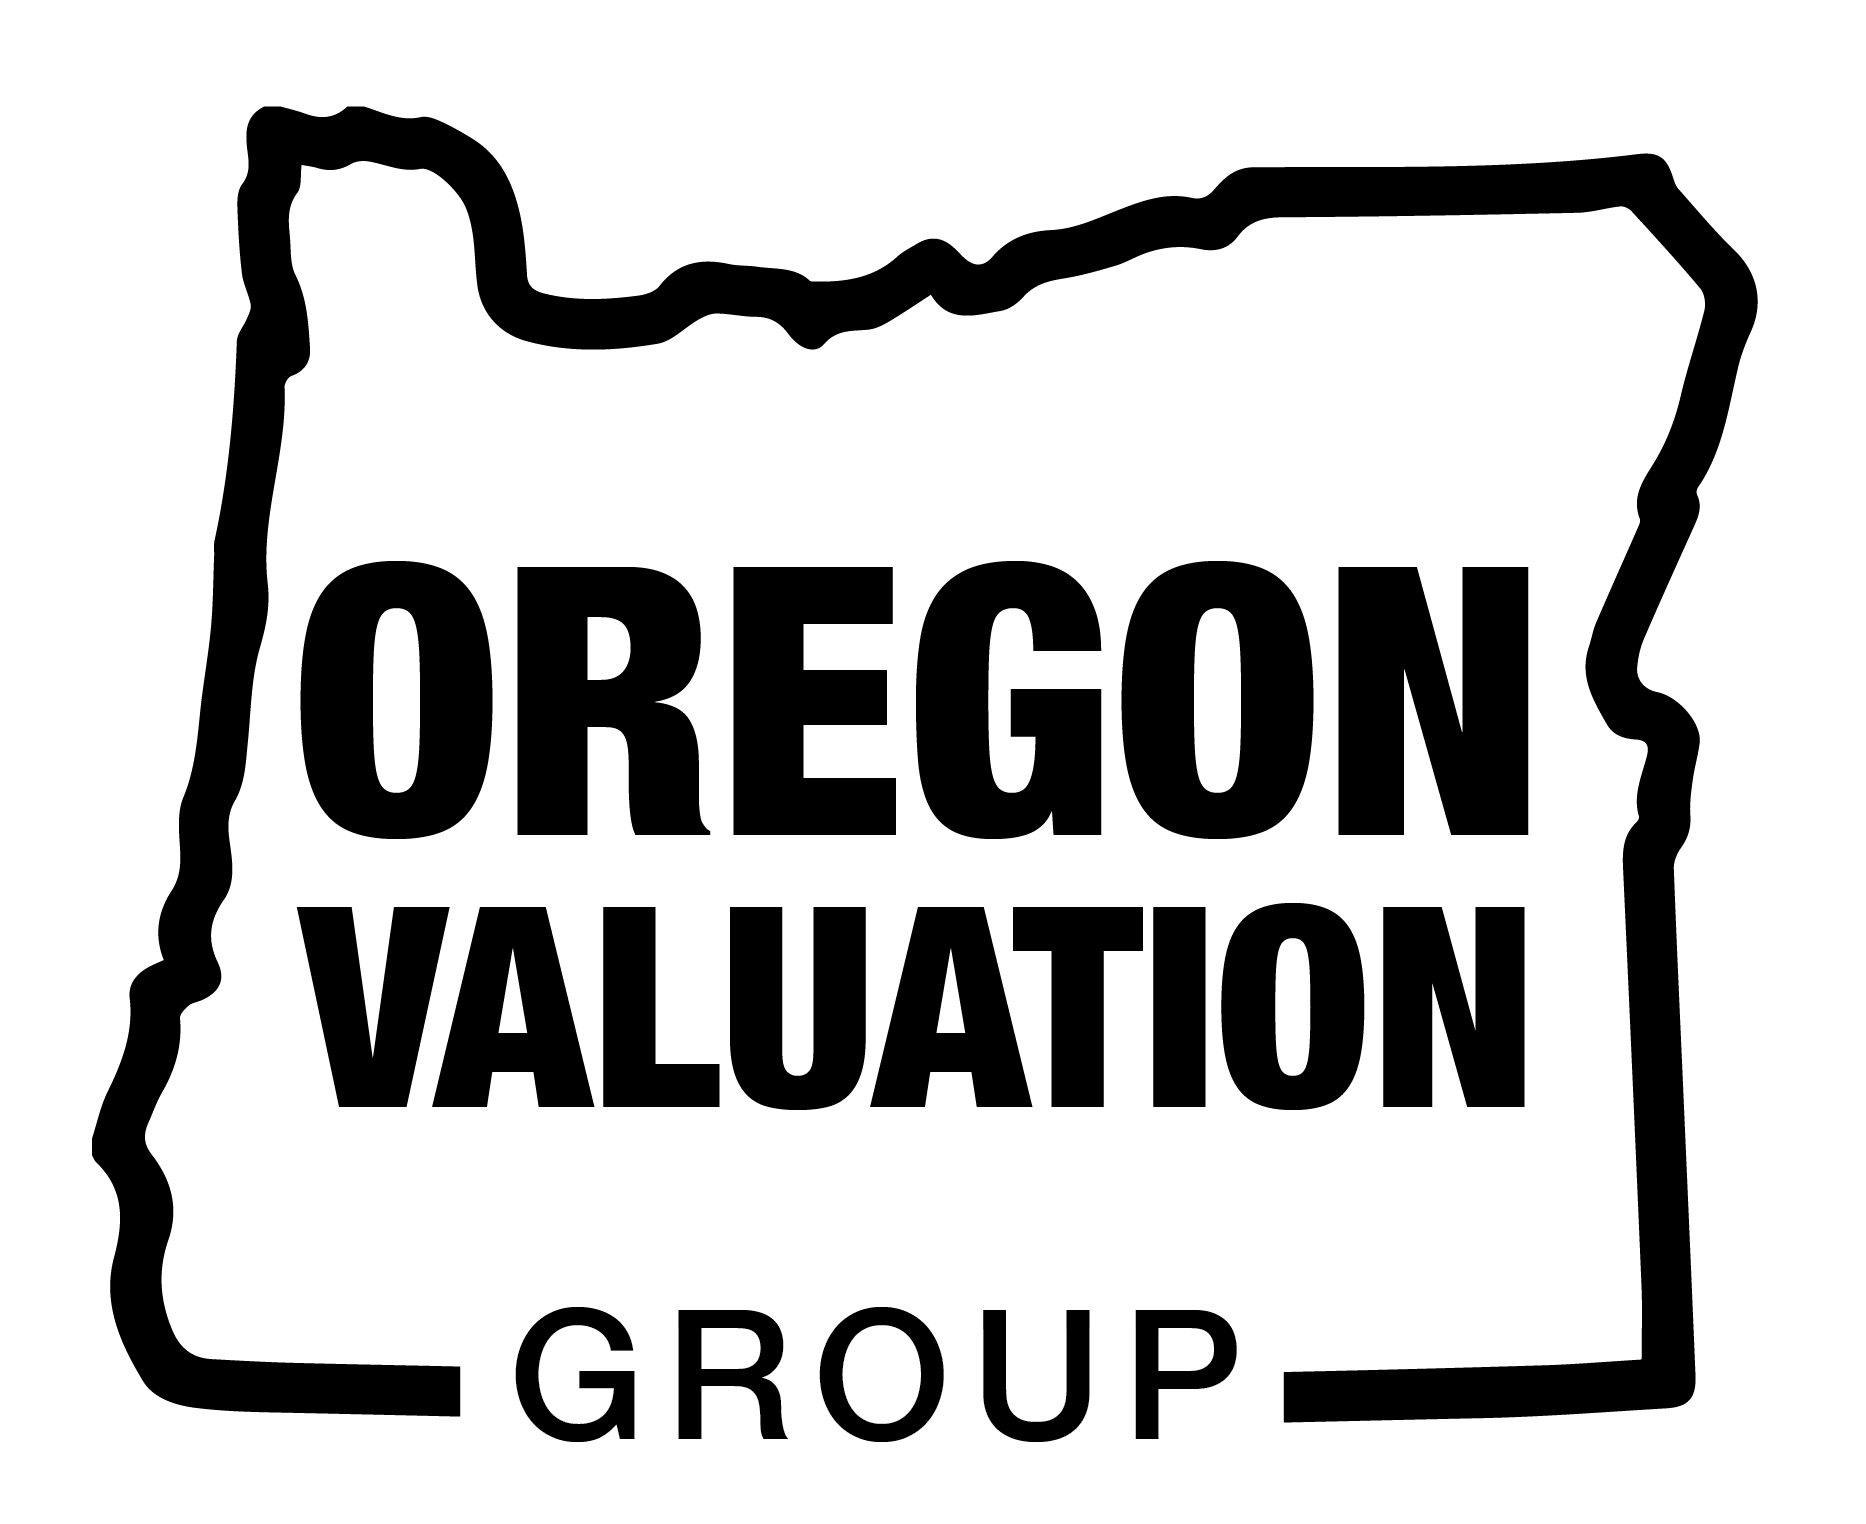 Oregon Valuation Group